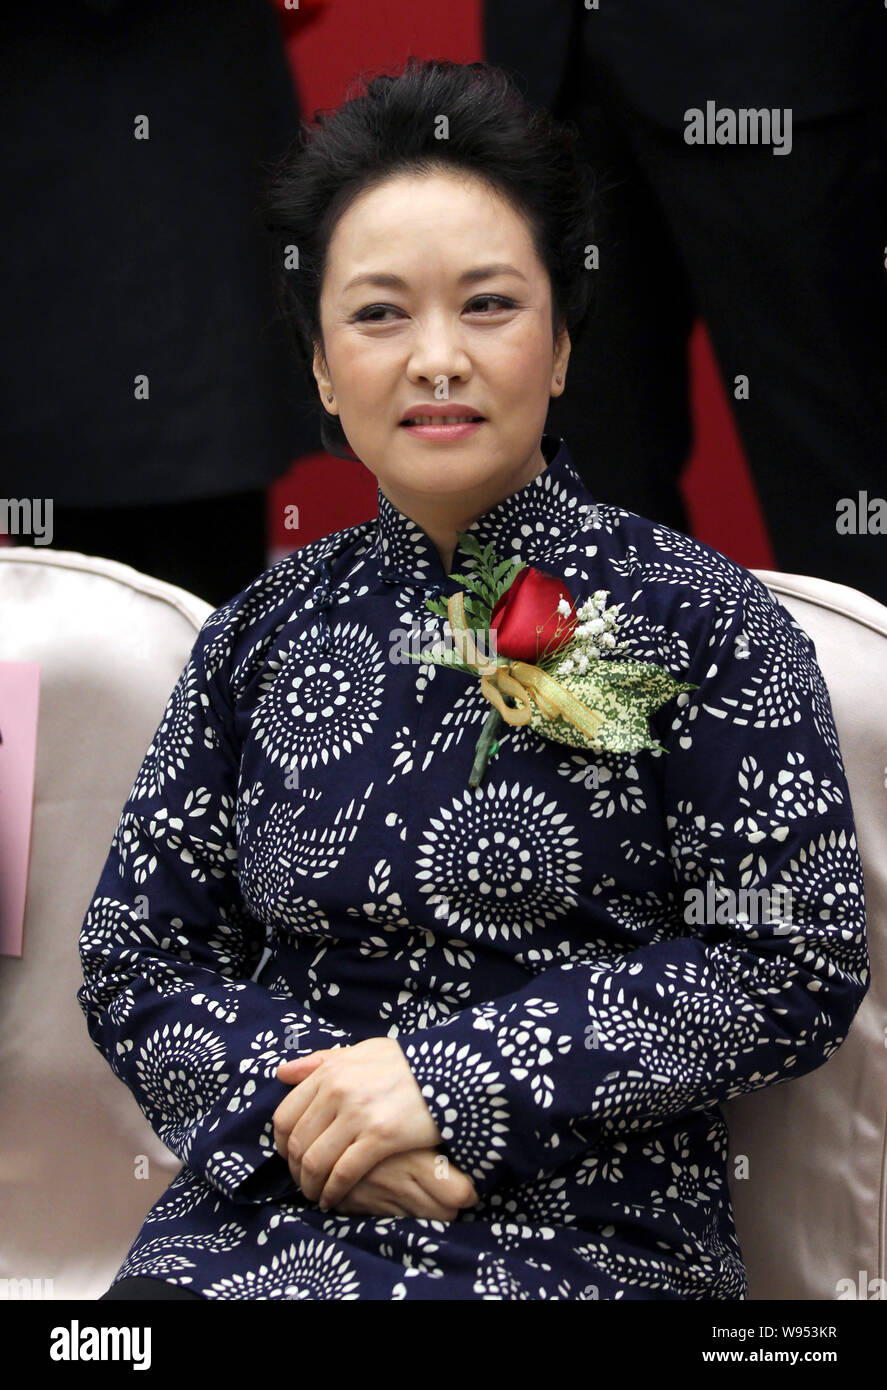 Il soprano cinese Peng Liyuan, moglie di cinesi Vice Presidente Xi Jinping, partecipa a una cerimonia per la prima la Cina Arts Awards a Pechino in Cina, 19 Decem Foto Stock